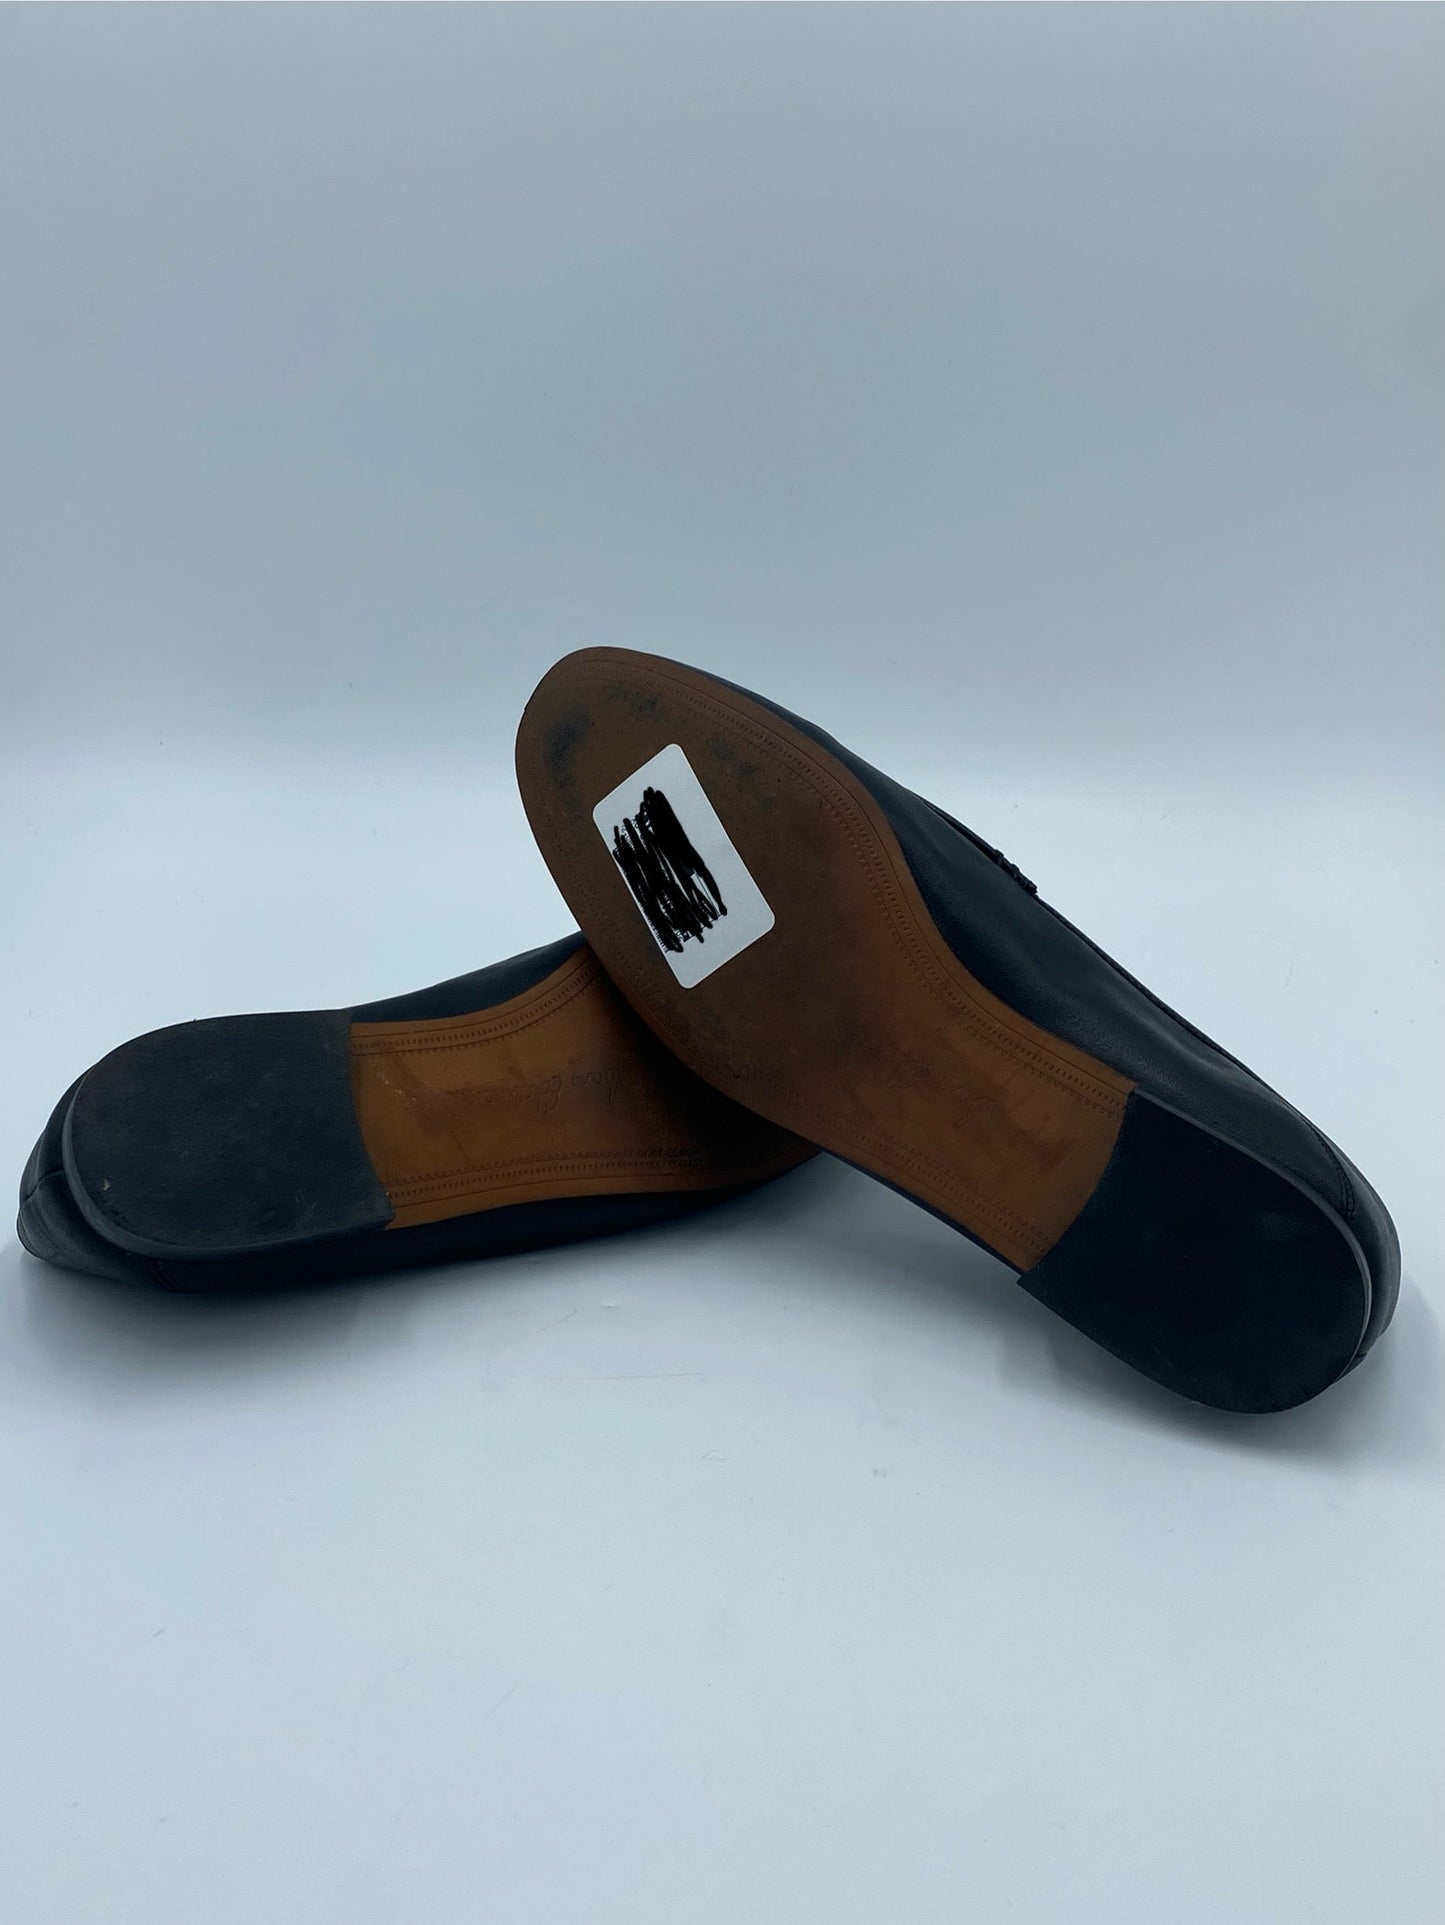 Black Shoes Flats Loafer Oxford Sam Edelman, Size 8